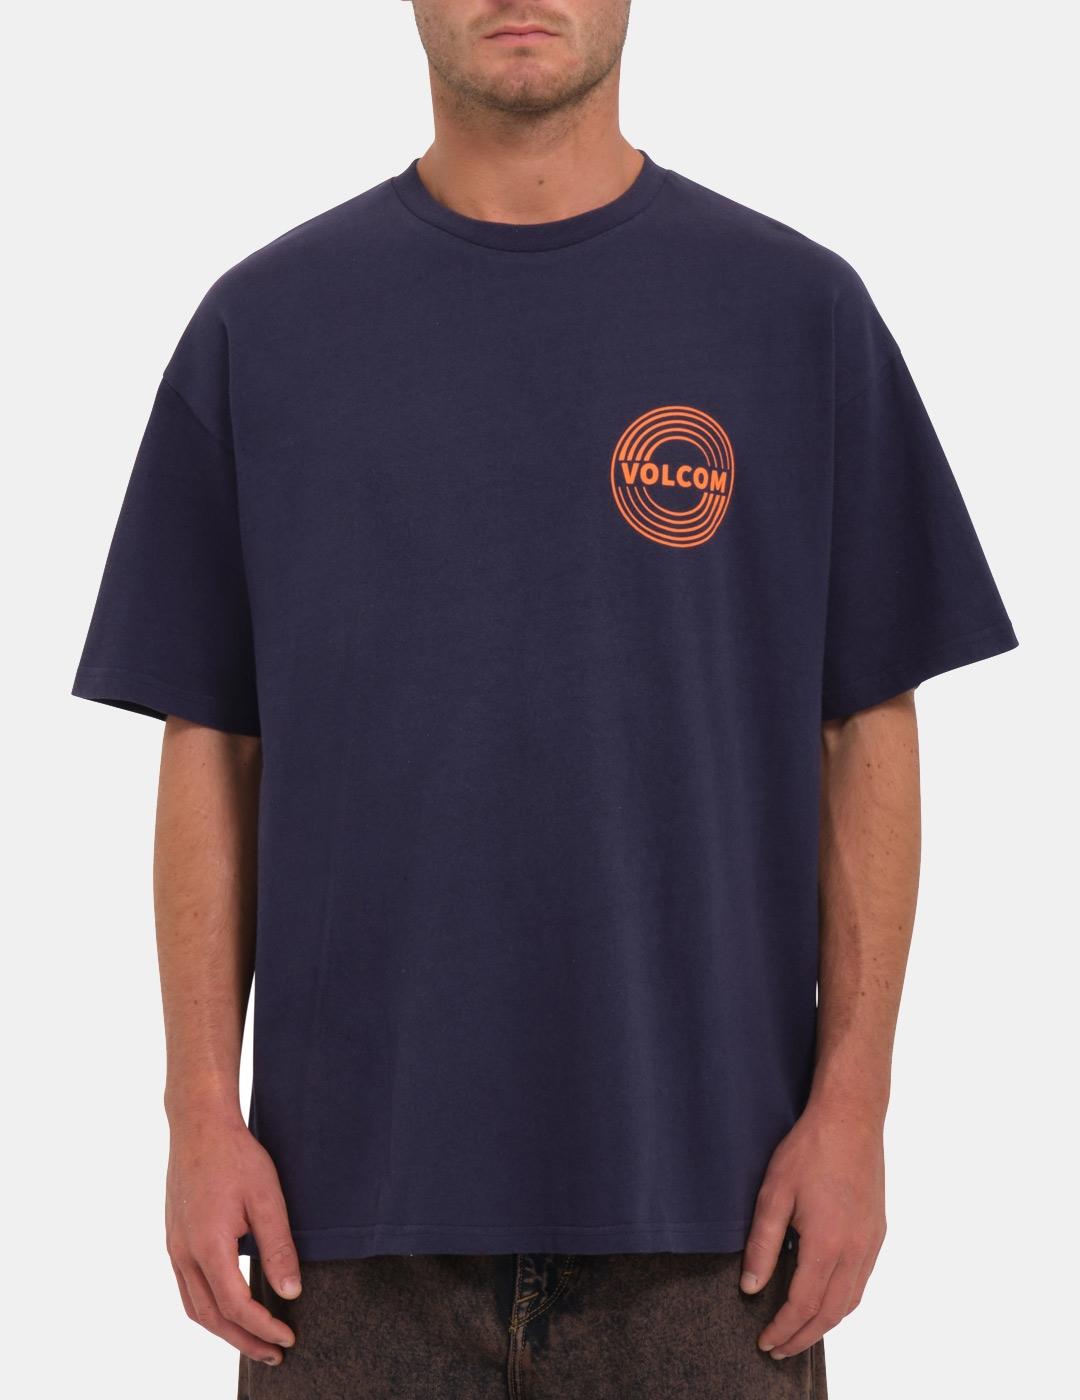 Camiseta VOLVOM SWITCHFLIP LSE - Eclipse